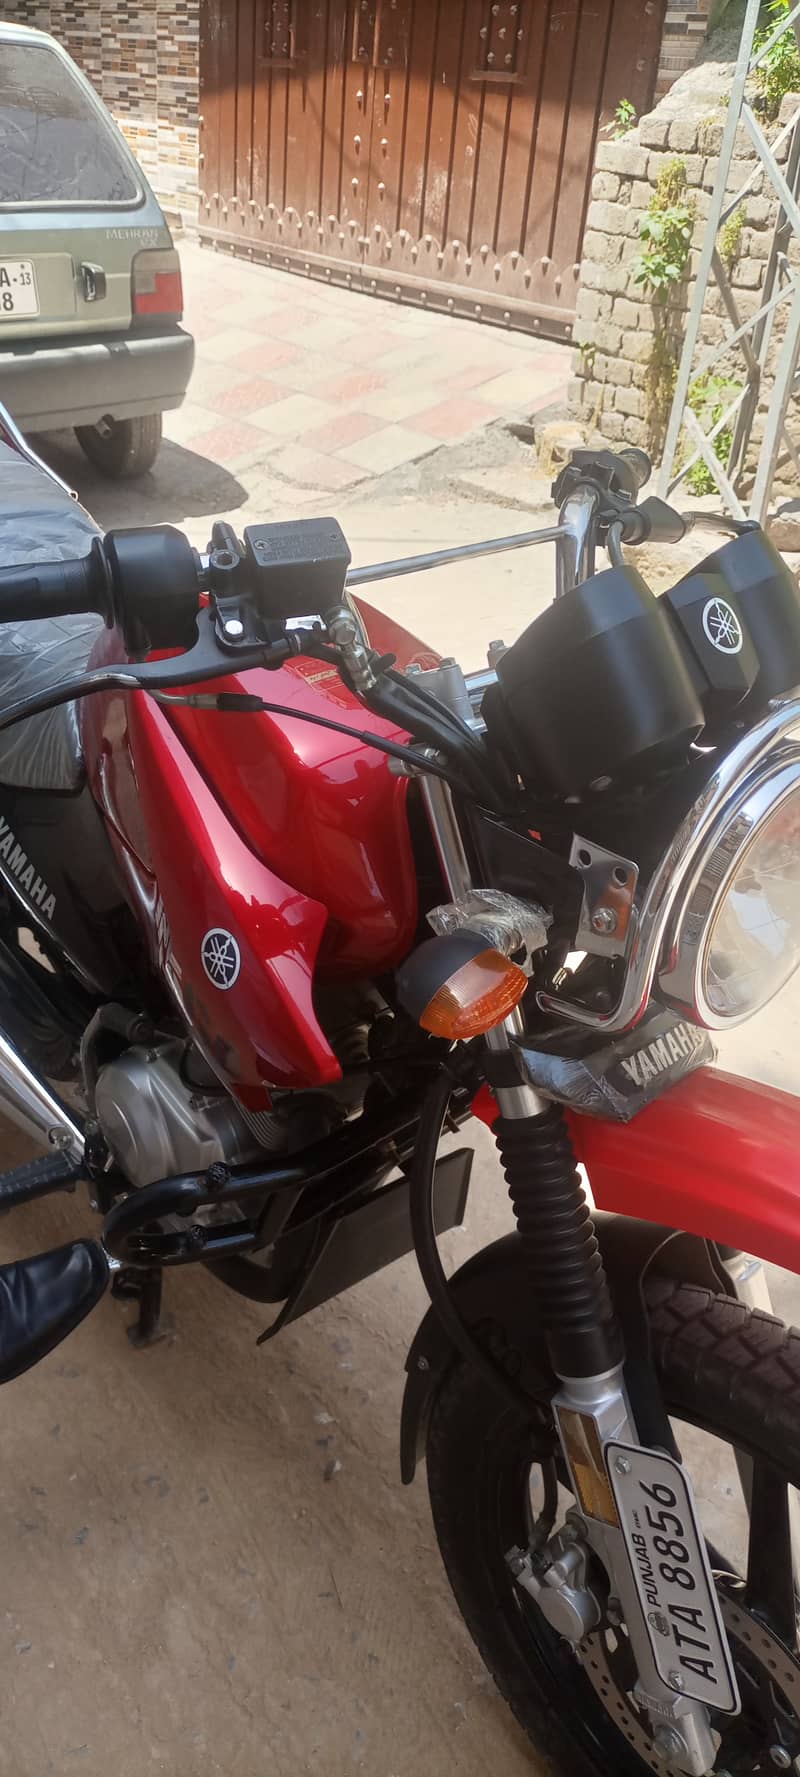 Yamaha YBR-G 125 cc, Sep 2023 Model, Punjab Registered, total genuine 1